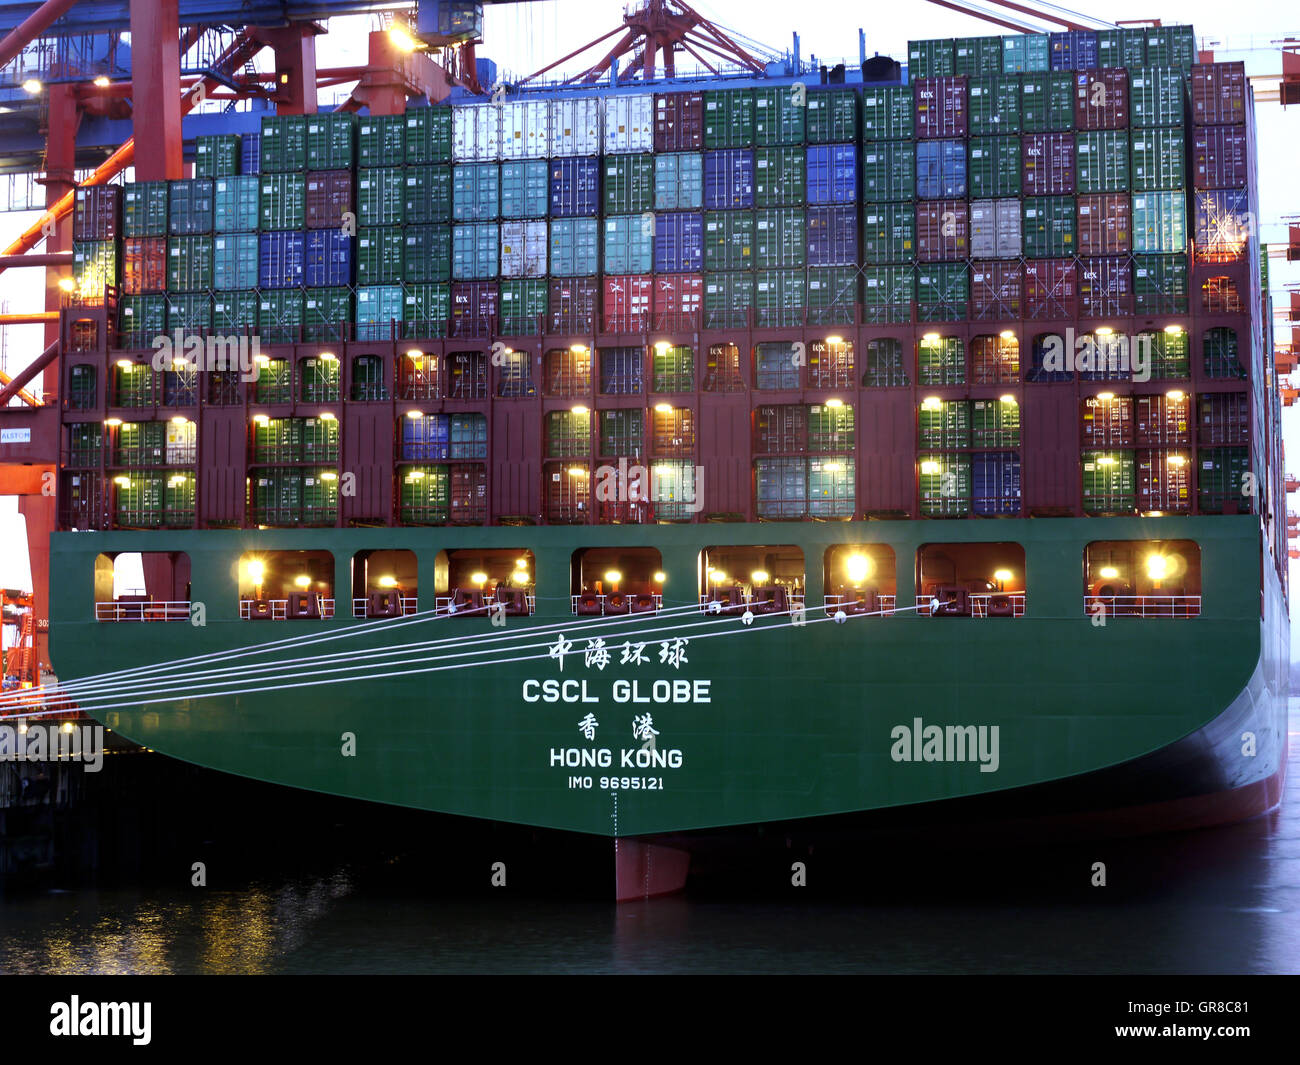 Cscl Globe In The Port Of Hamburg Stock Photo